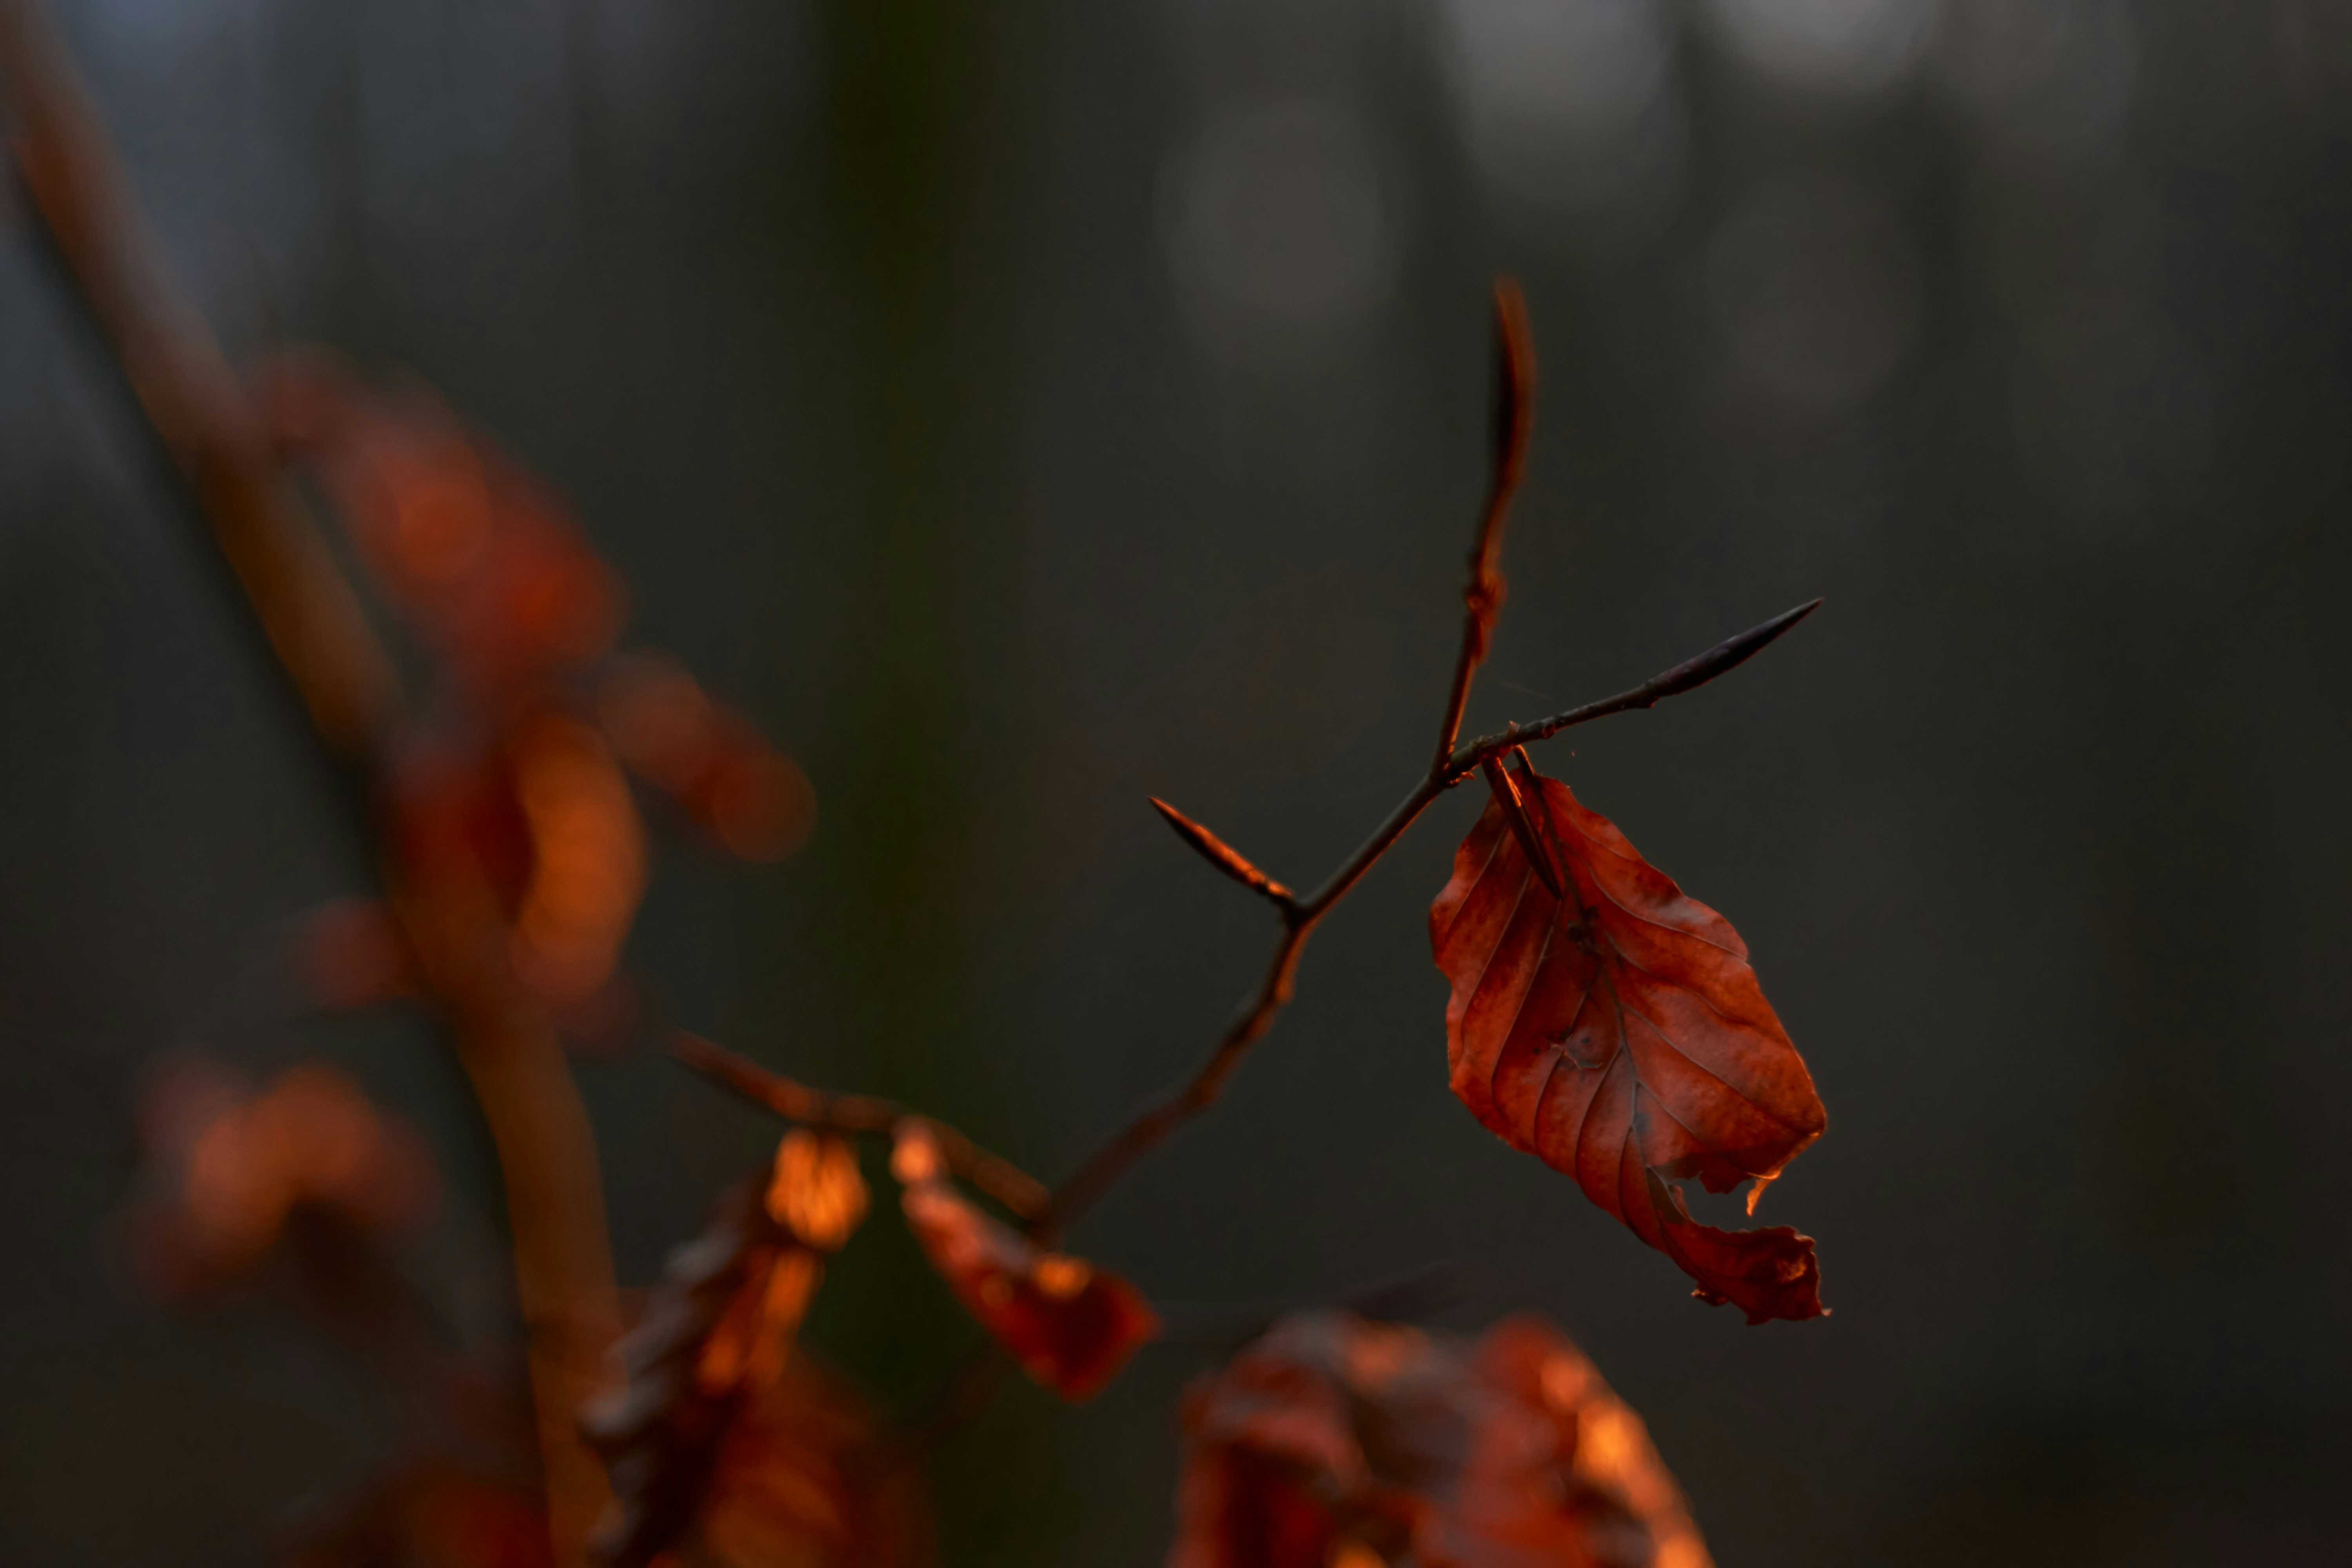 red maple leaf in tilt shift lens